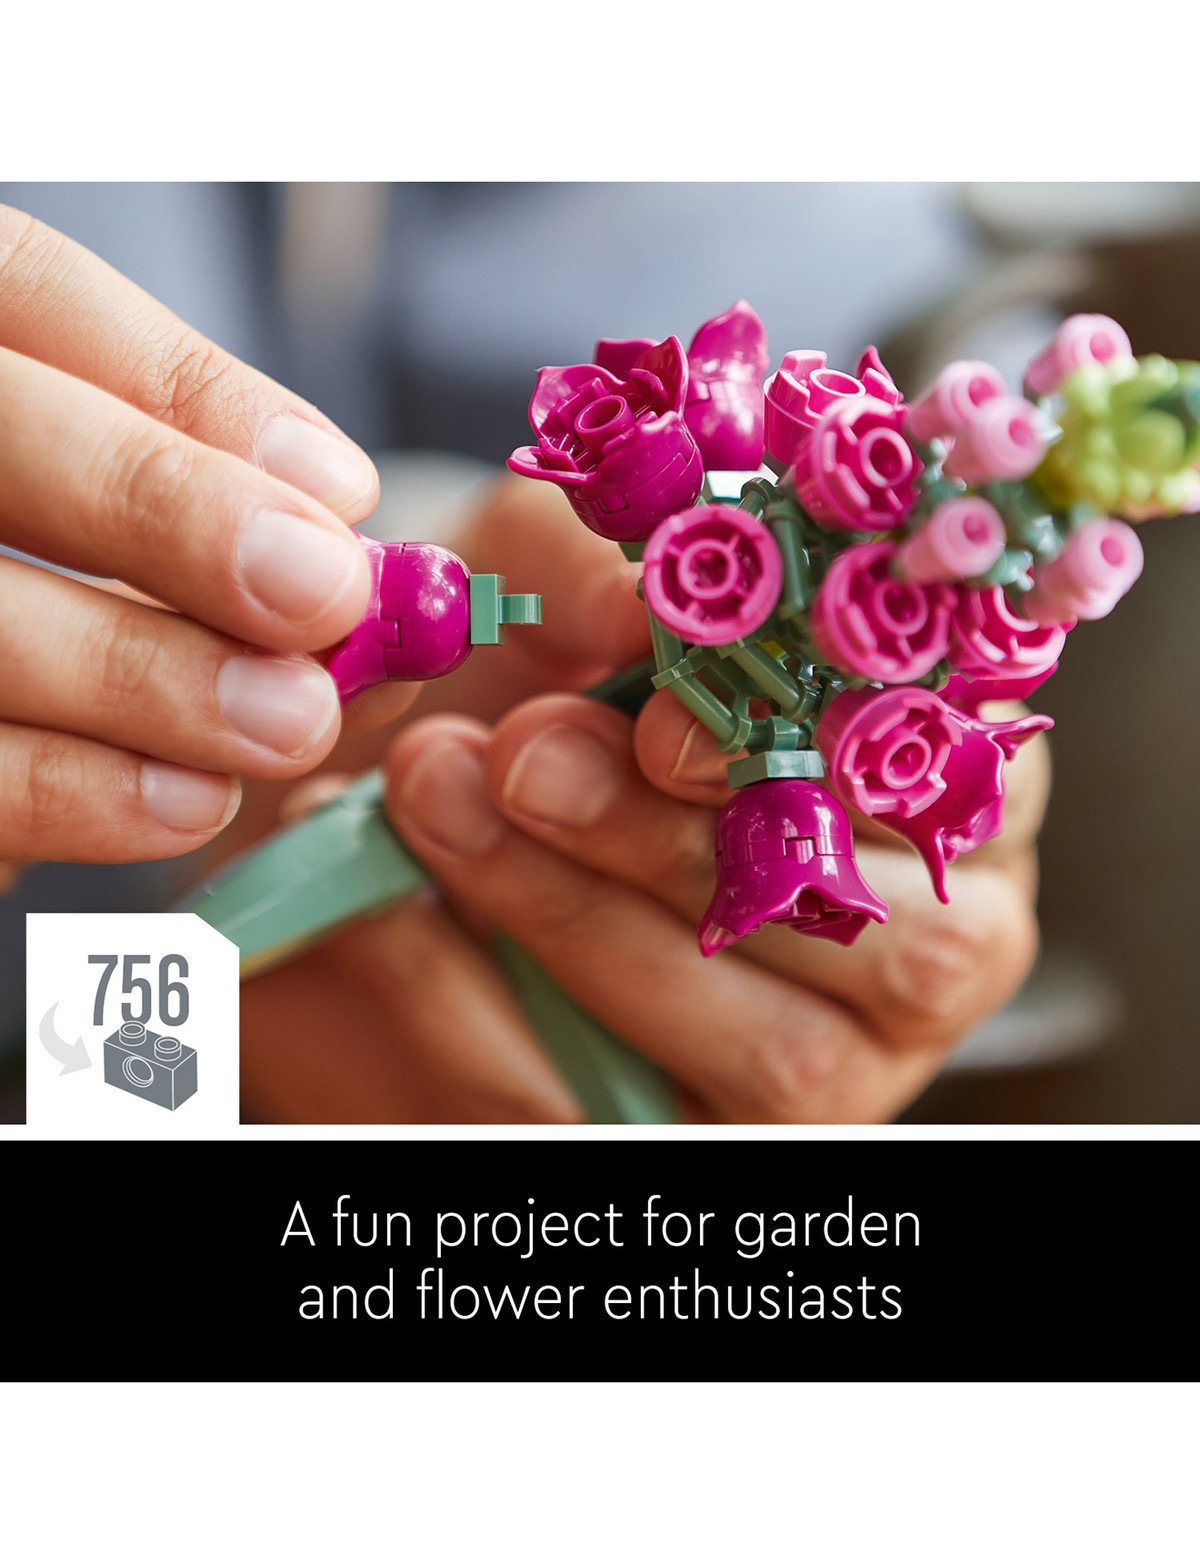 LEGO Creator Expert EXPERT Botanical Collection - Flower Bouquet, 10280 -  Lego & Construction